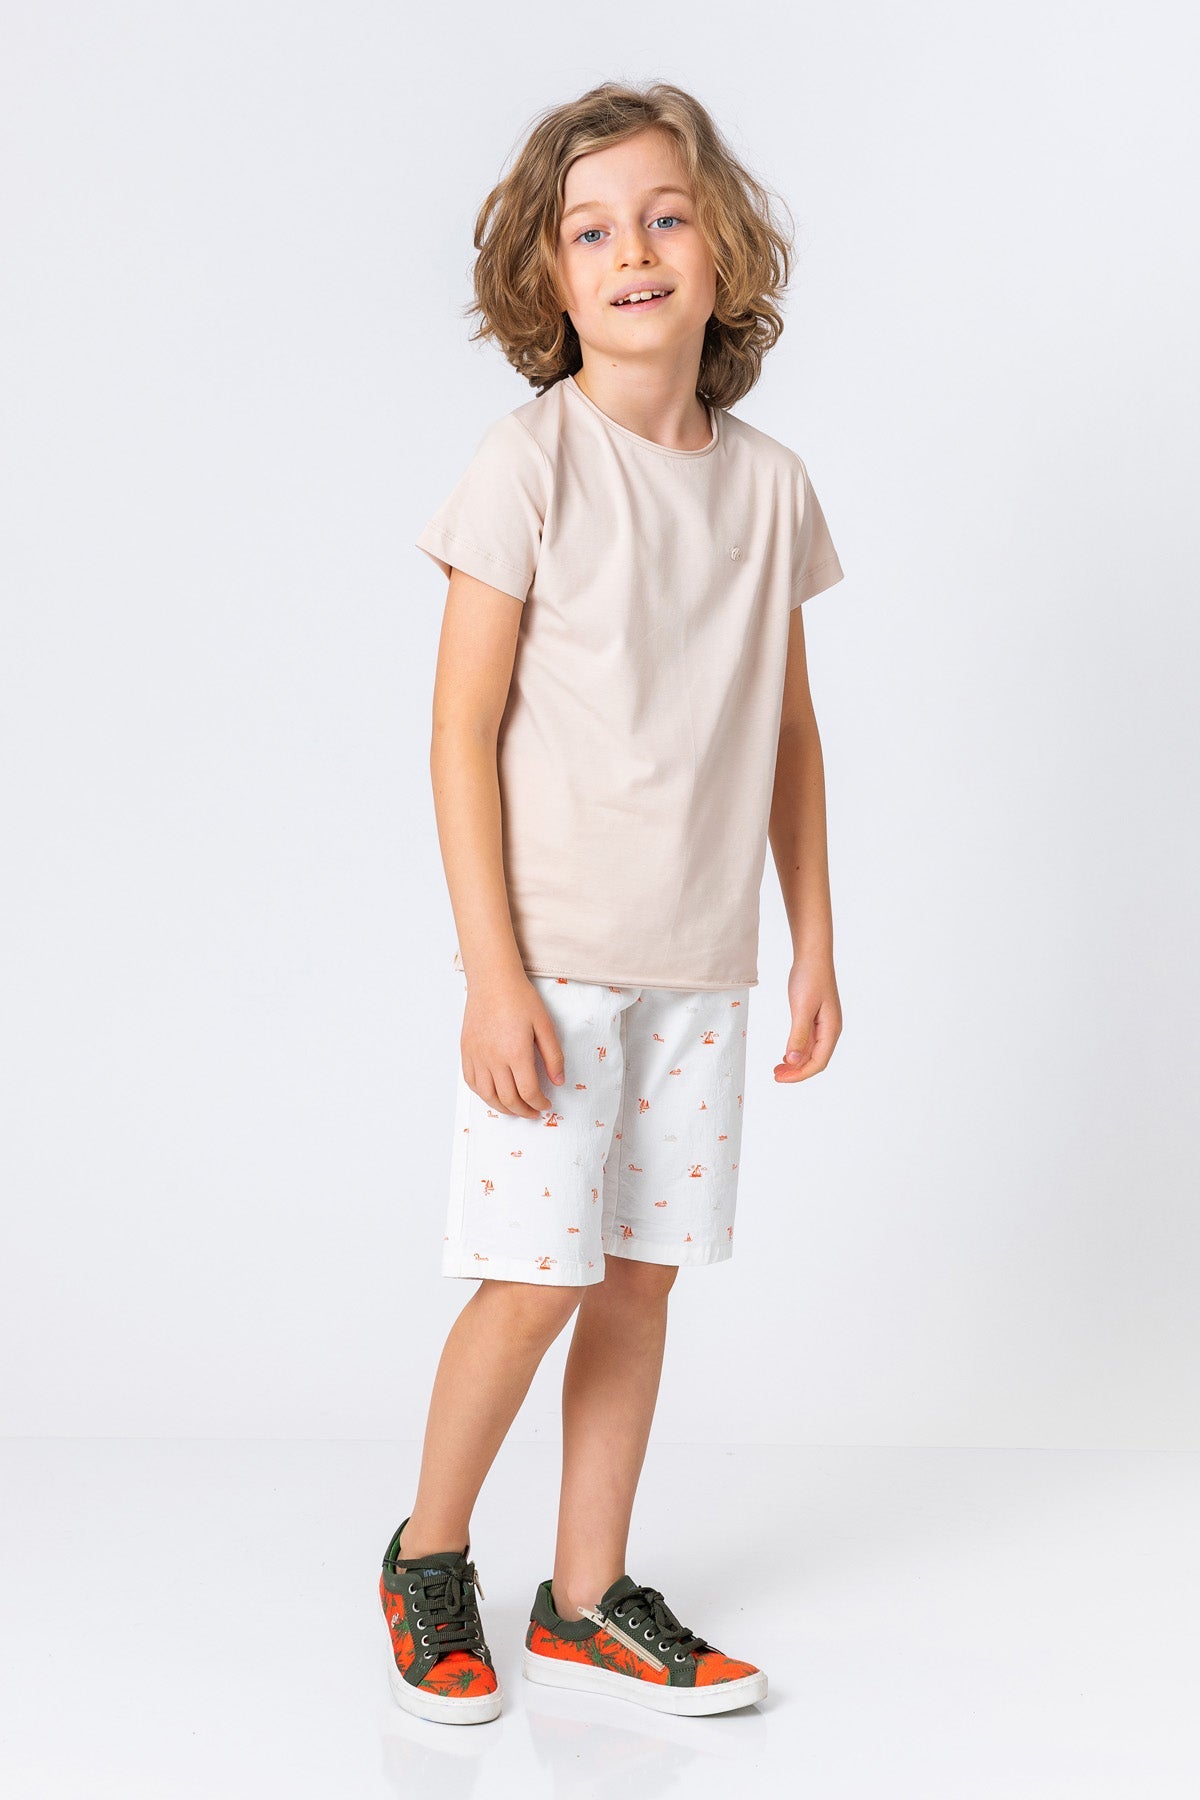 InCity Kids Boys Plain Solid Round Neck Short Sleeve Basic T-Shirt | T-Shirts